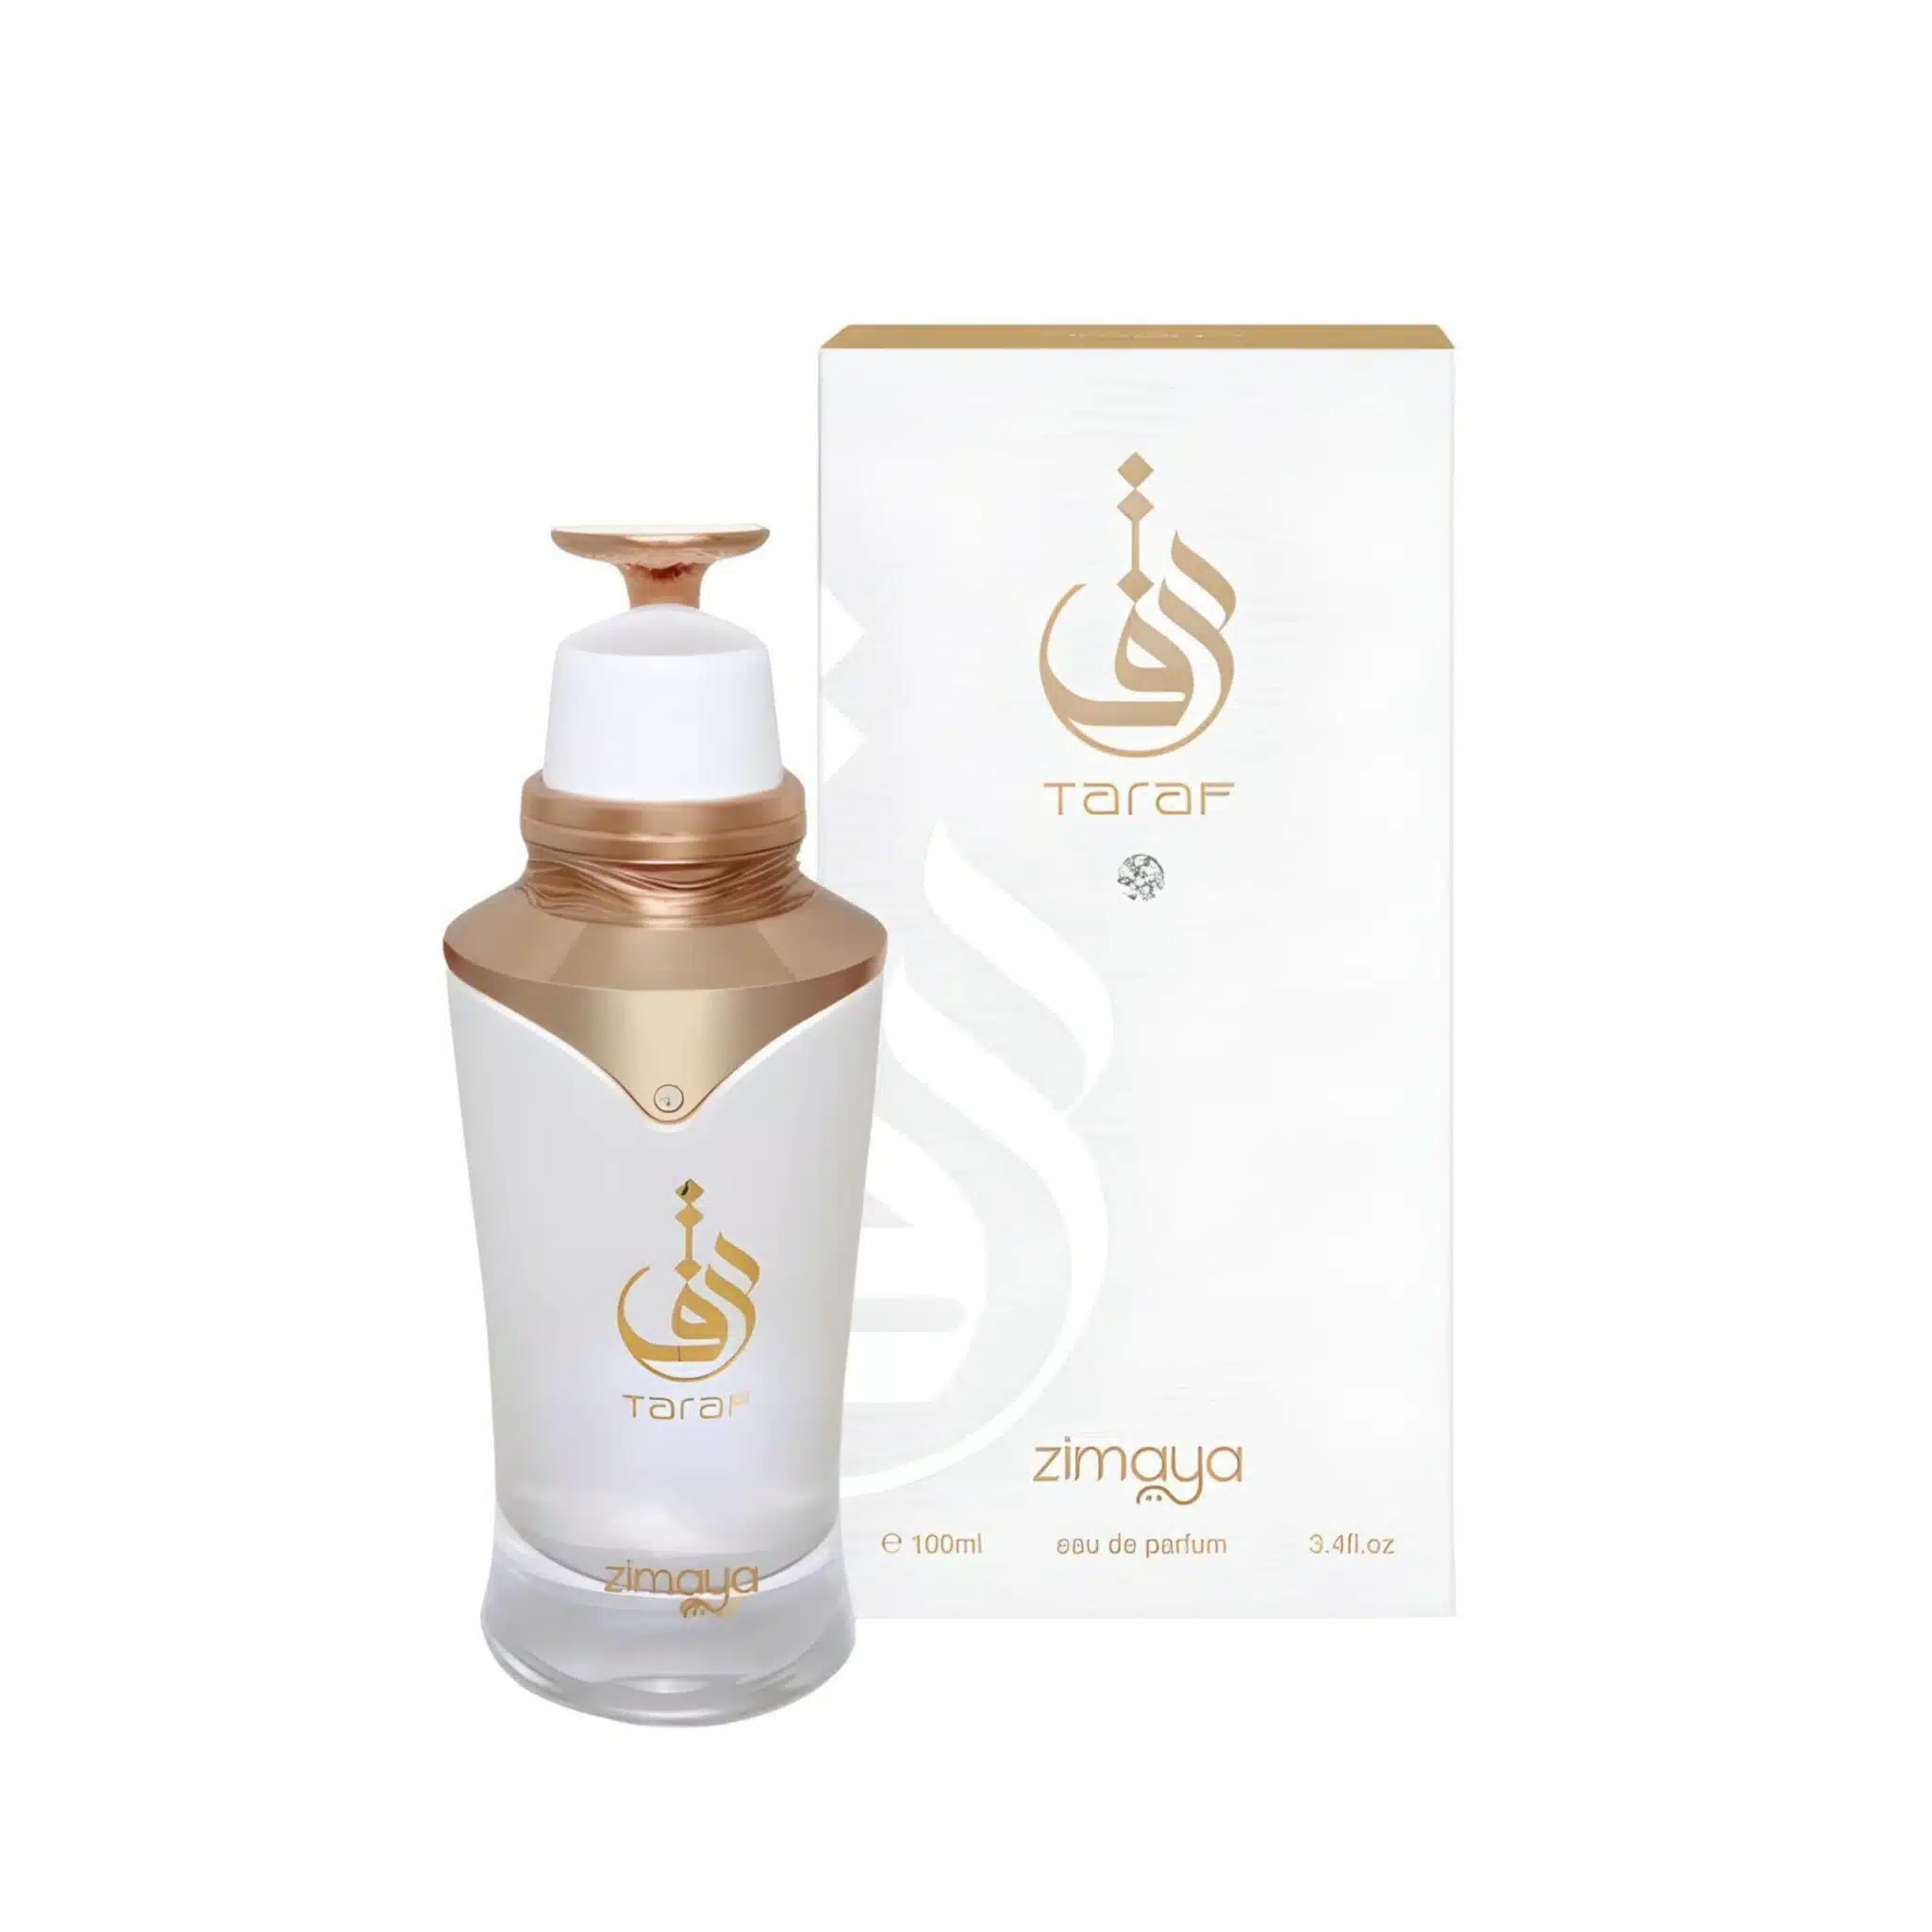 Zimaya Taraf White Perfume Eau De Parfum 100Ml By Afnan